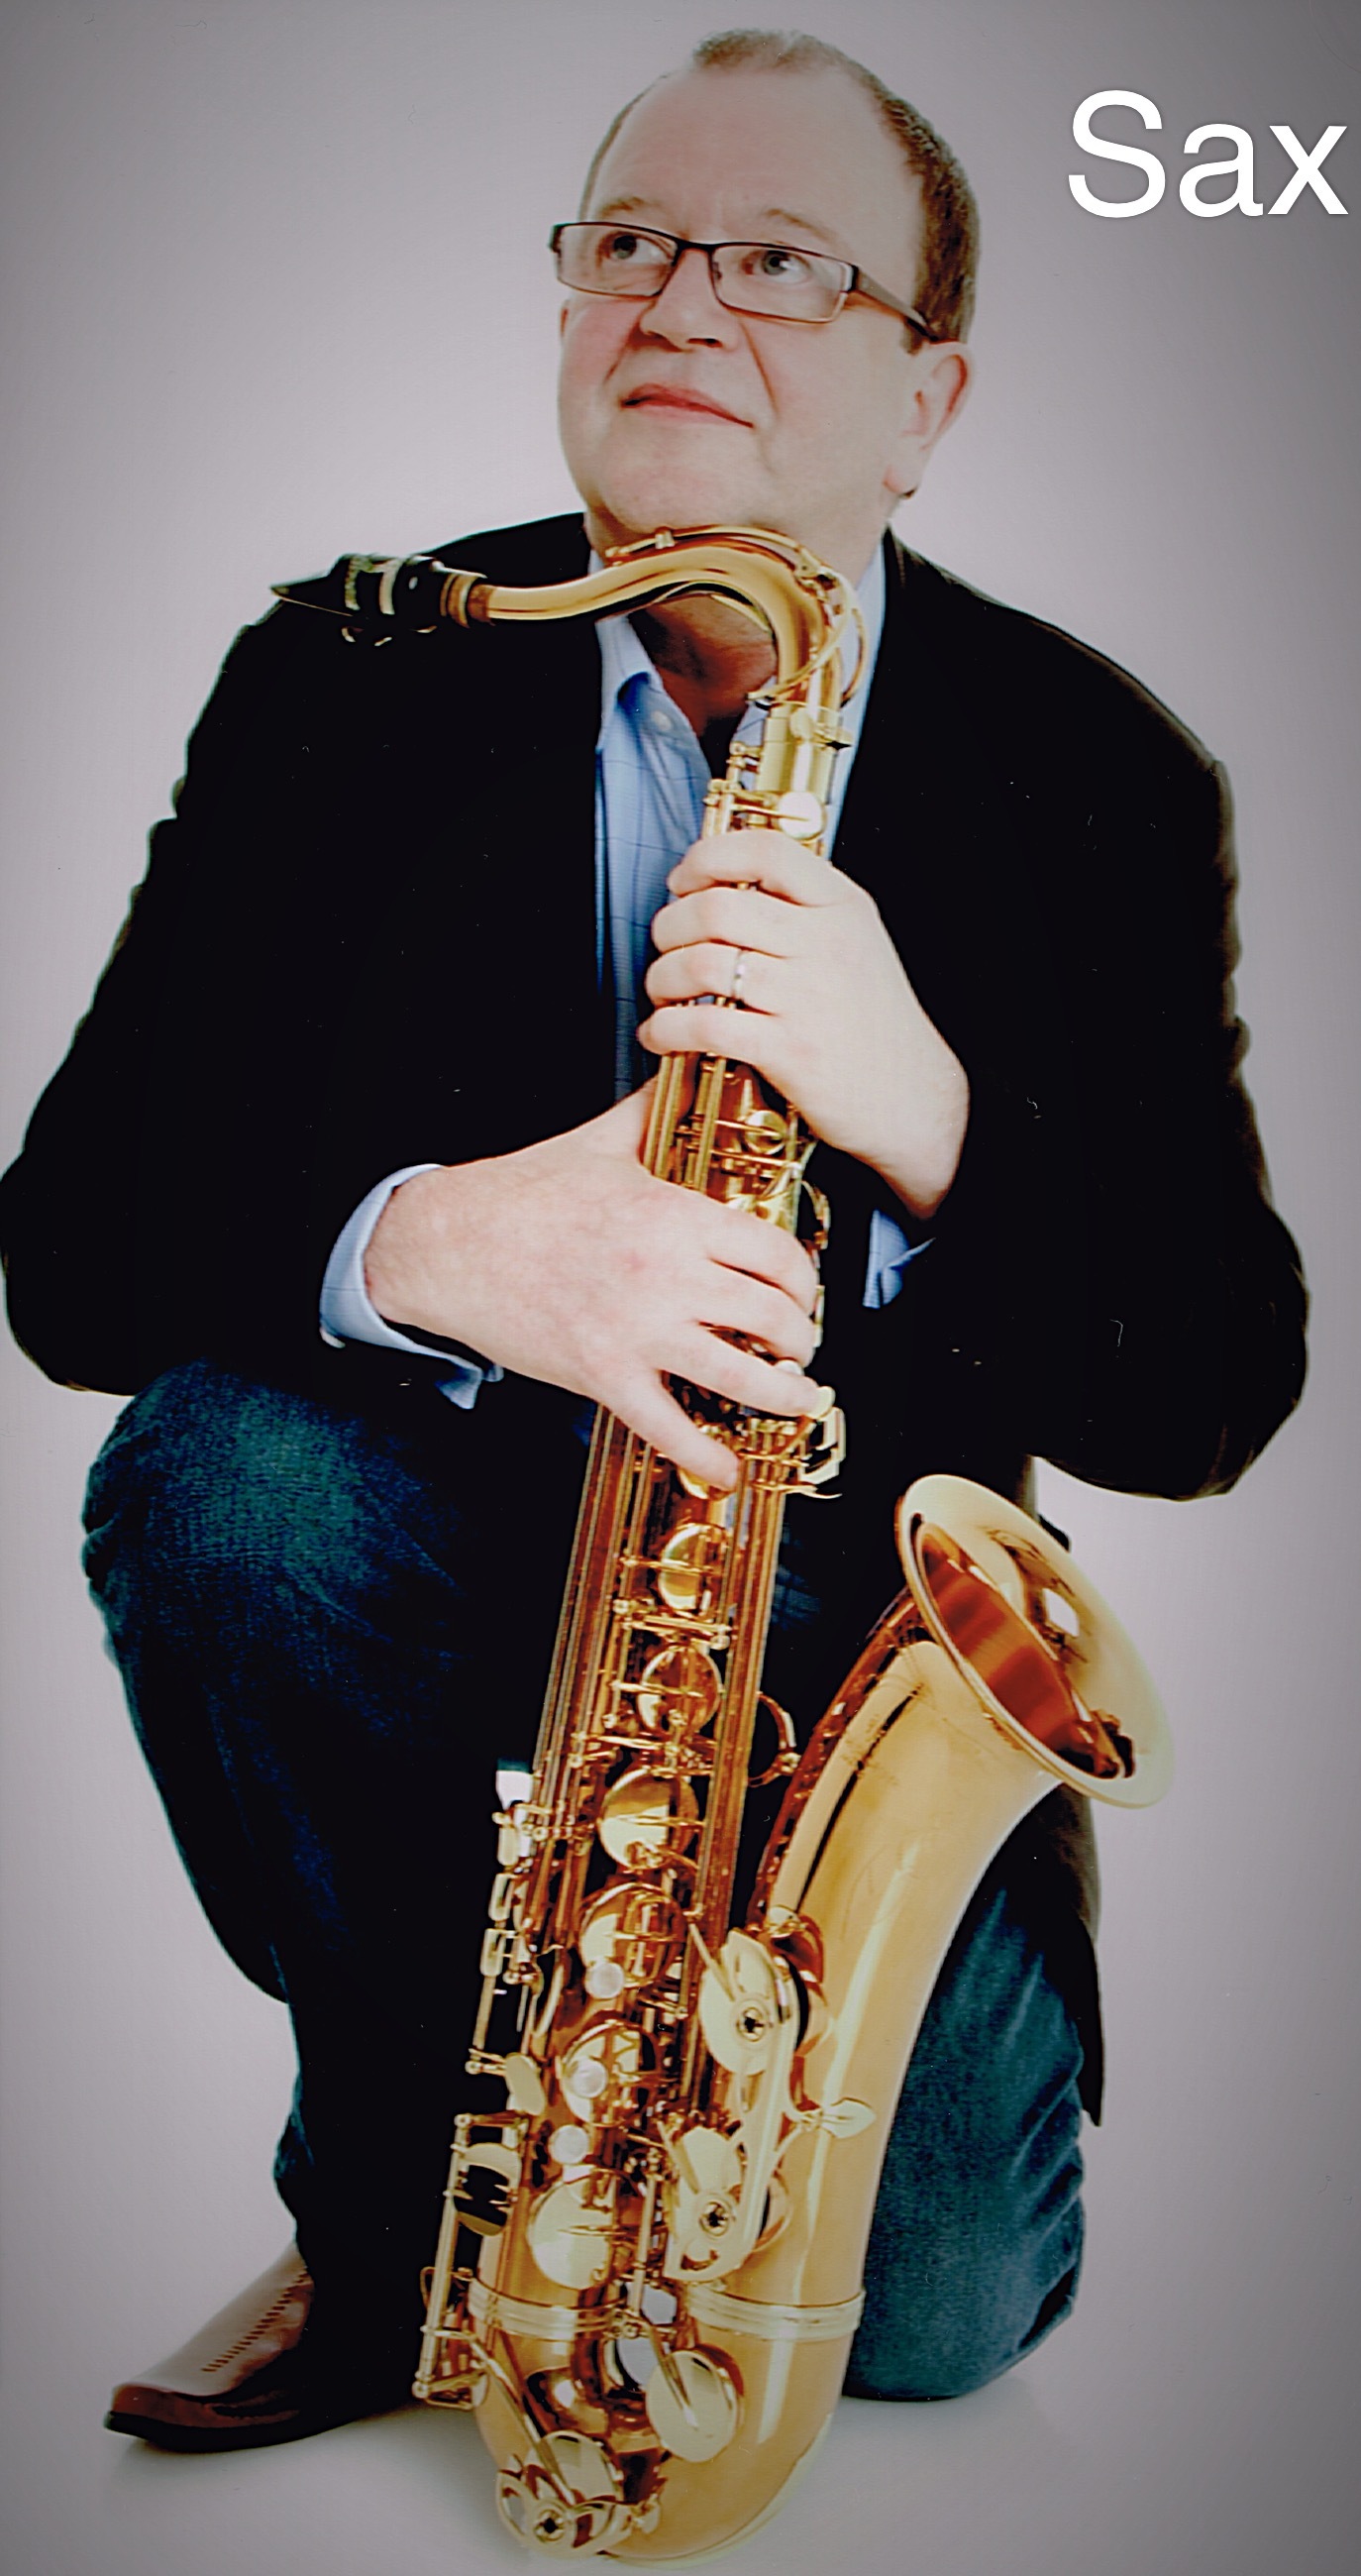 Saxophonist Ken in Morpeth, Northumberland